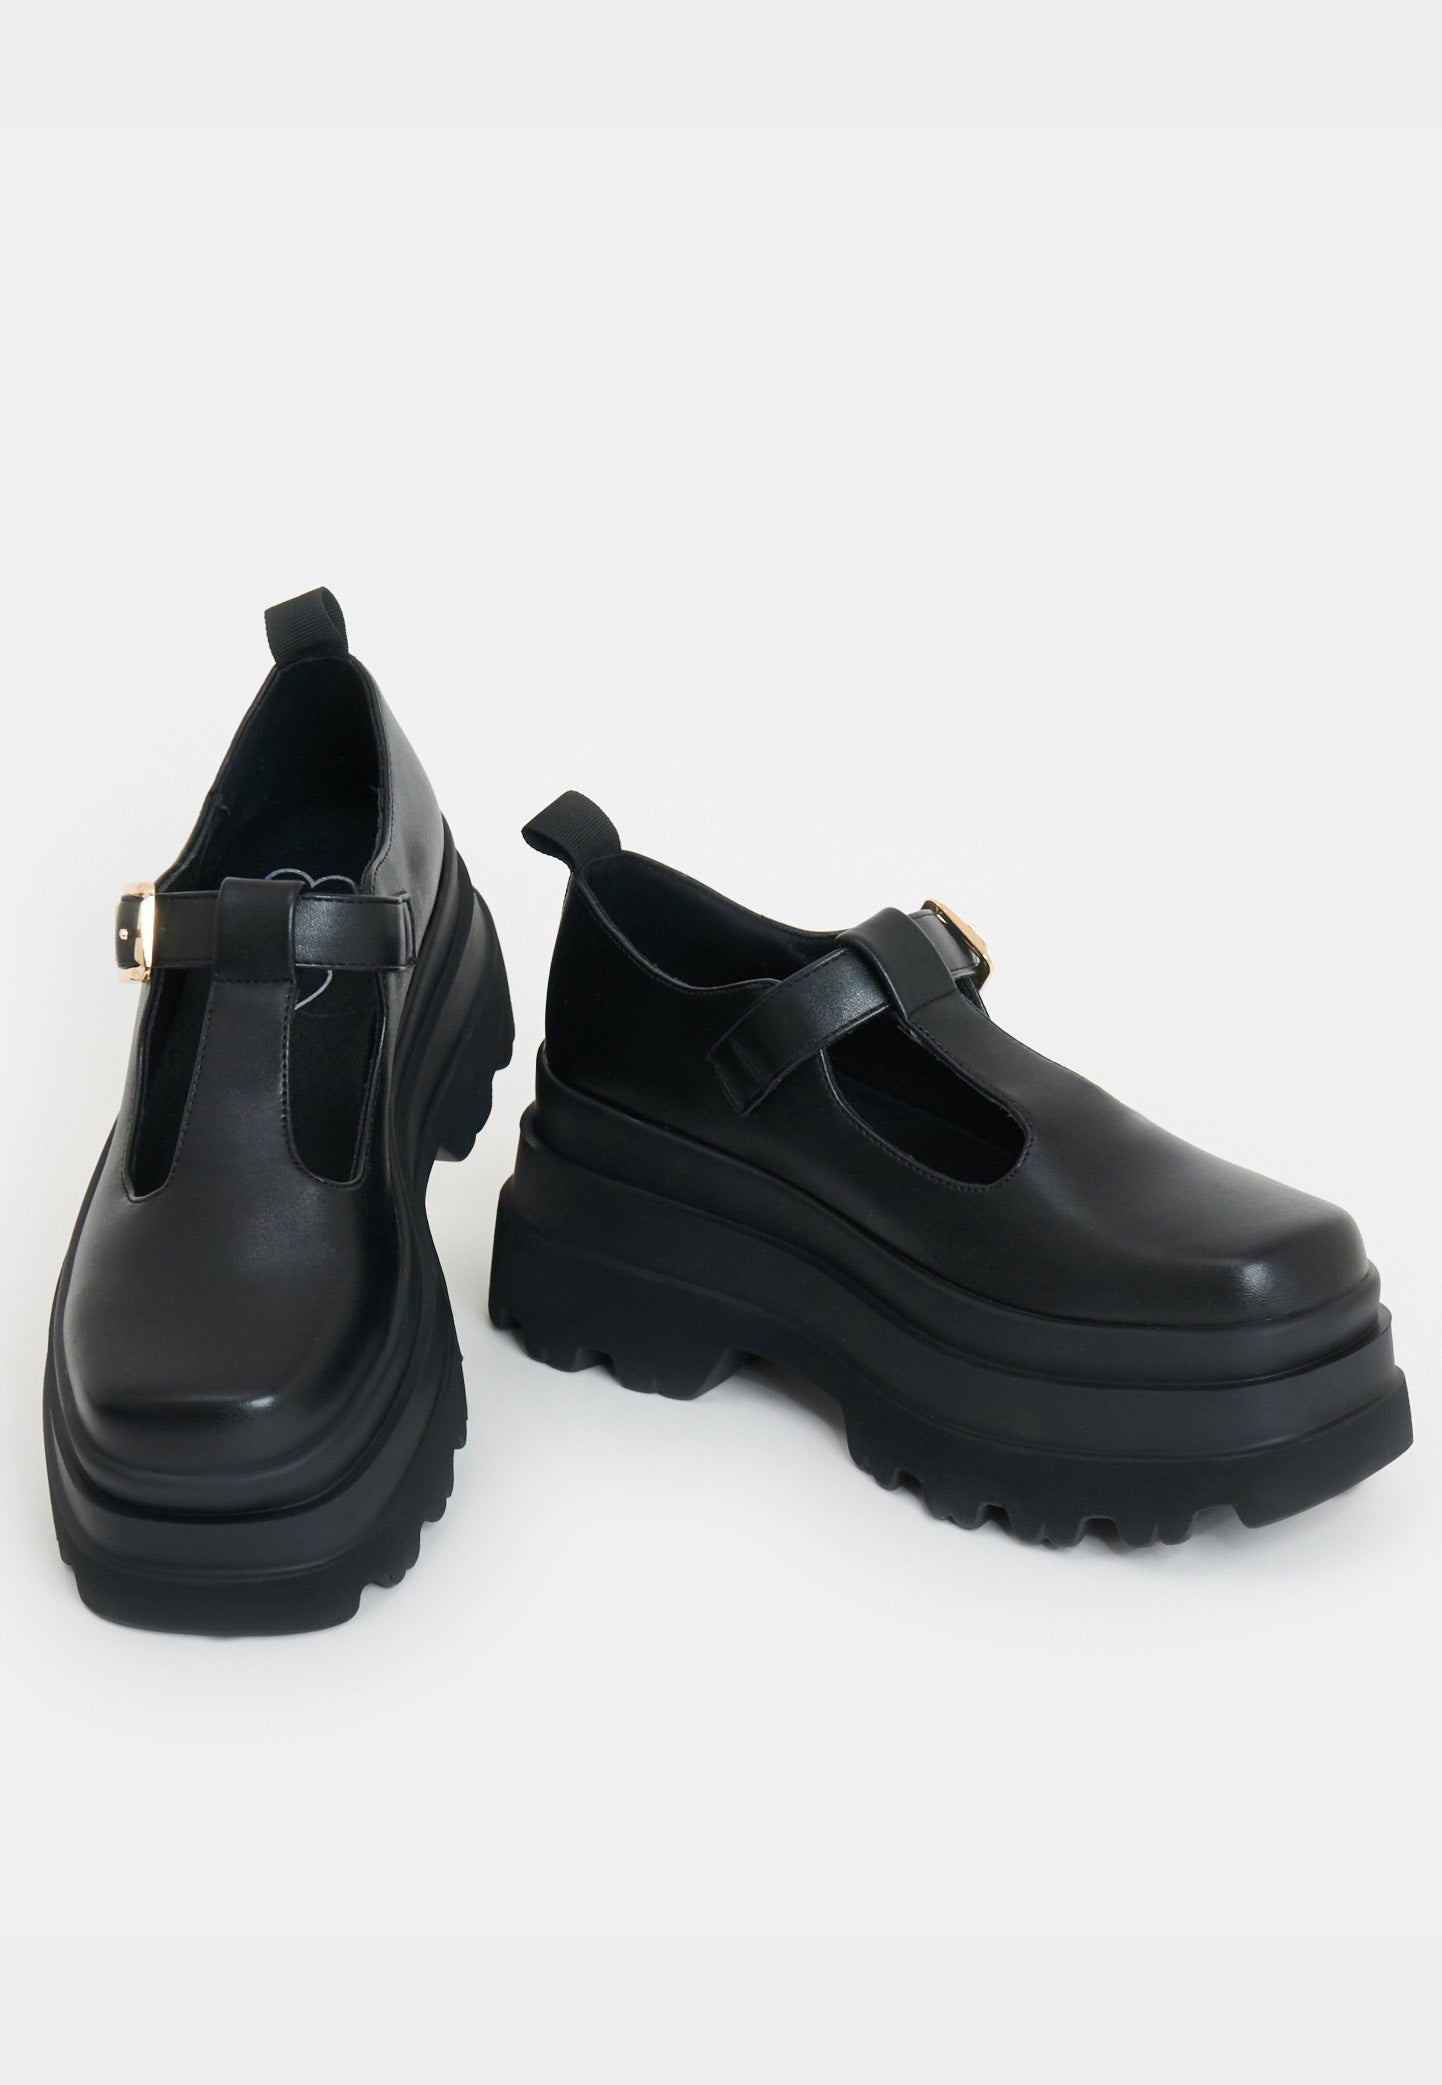 Koi Footwear - Silent Amity Trident Platform Mary Janes Black - Girl Shoes